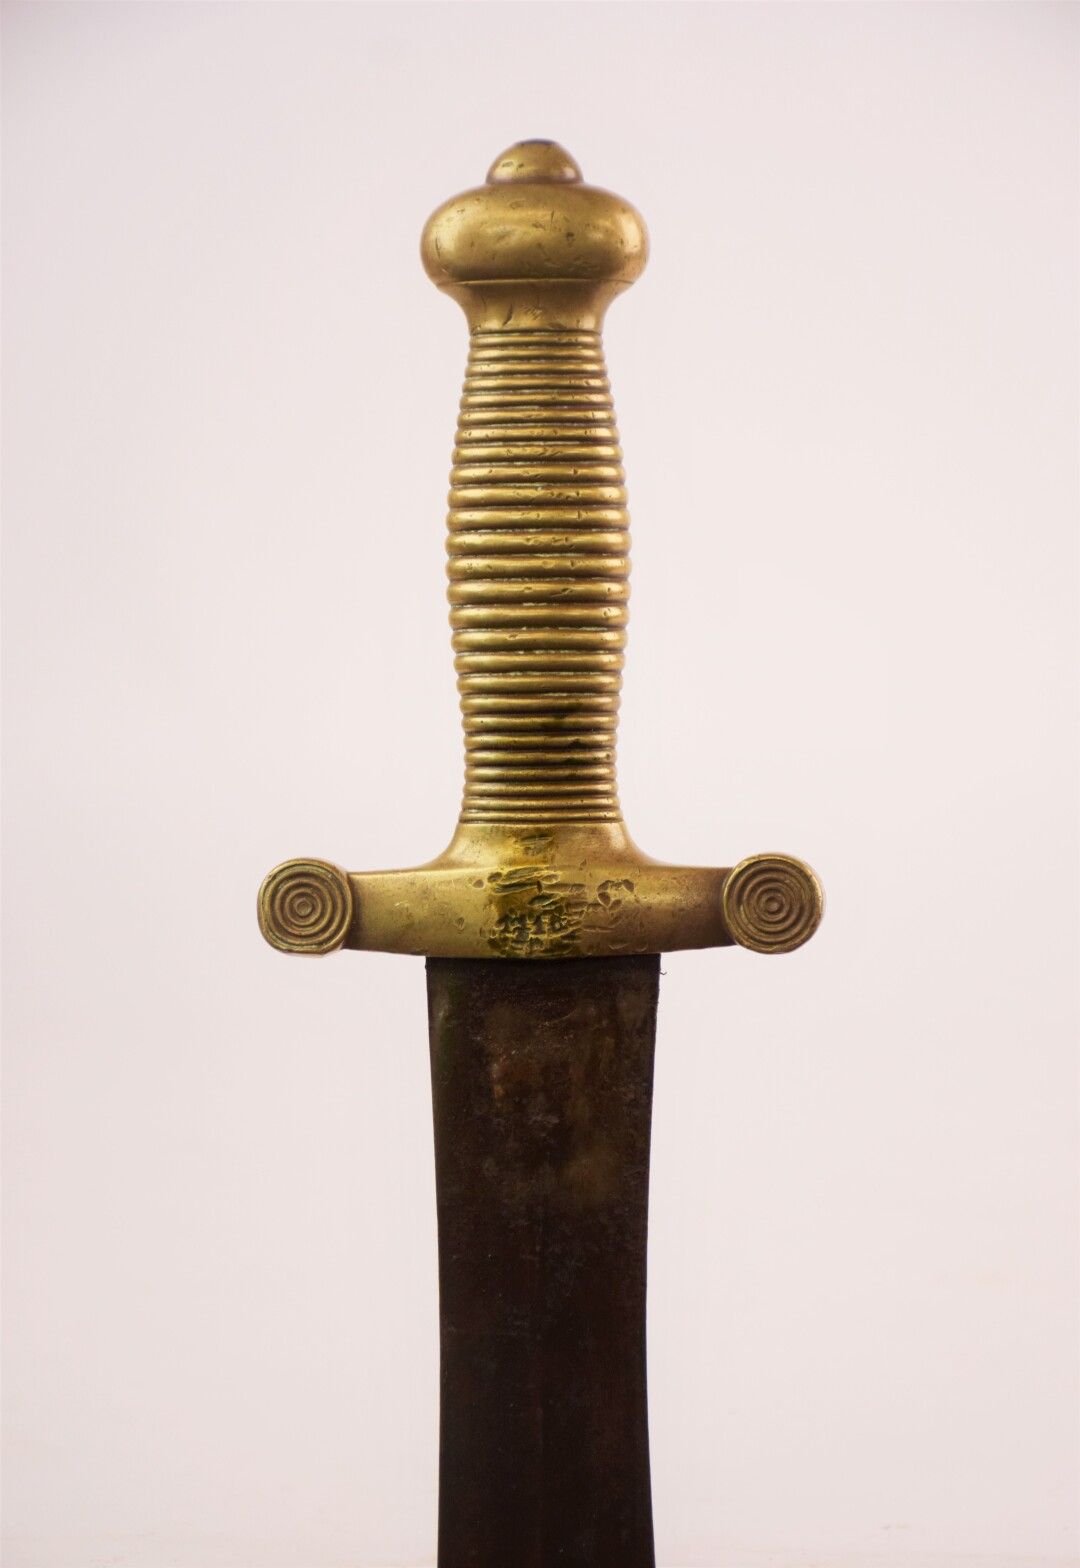 Null 1831年的步兵剑。青铜手柄，冲压，直的两刃刀（打击，氧化的刀片），其刀鞘上有剑的编号

总长度：63.5厘米